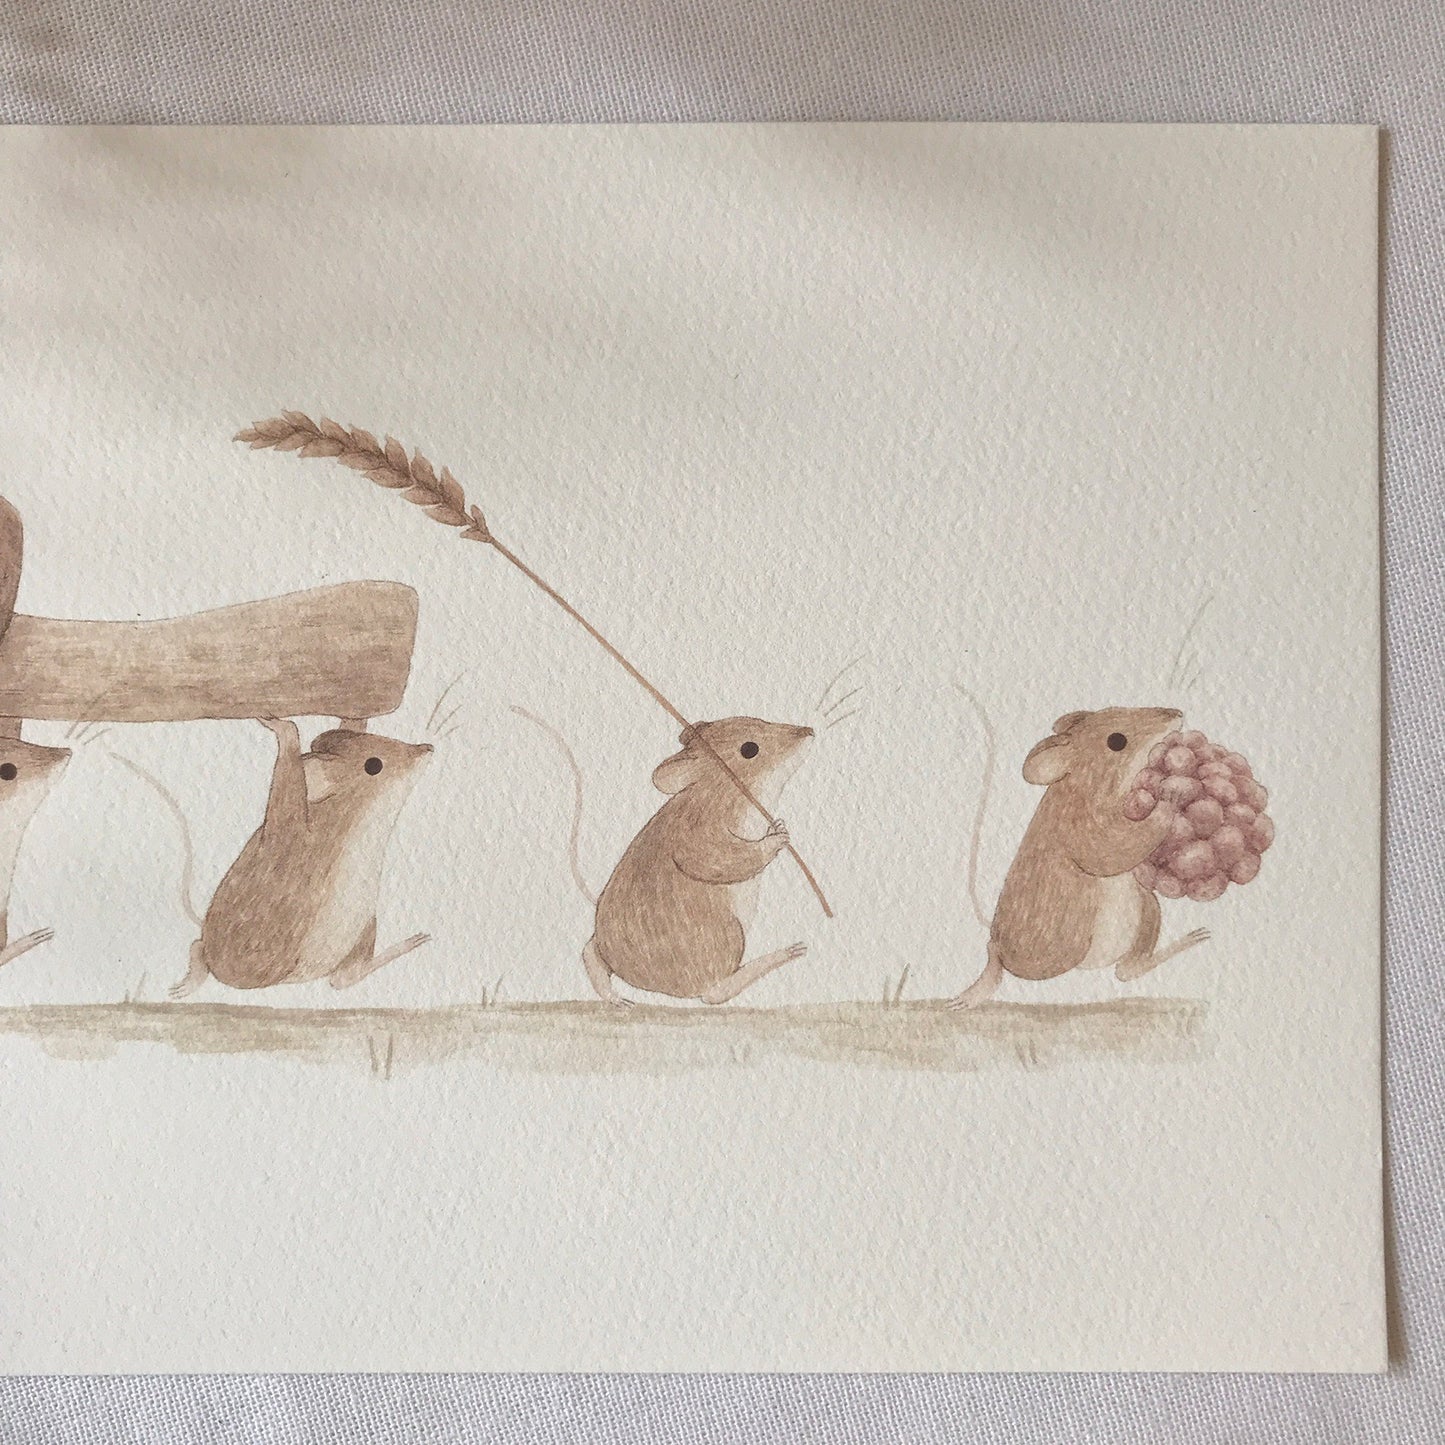 Harvest Mice Art Print